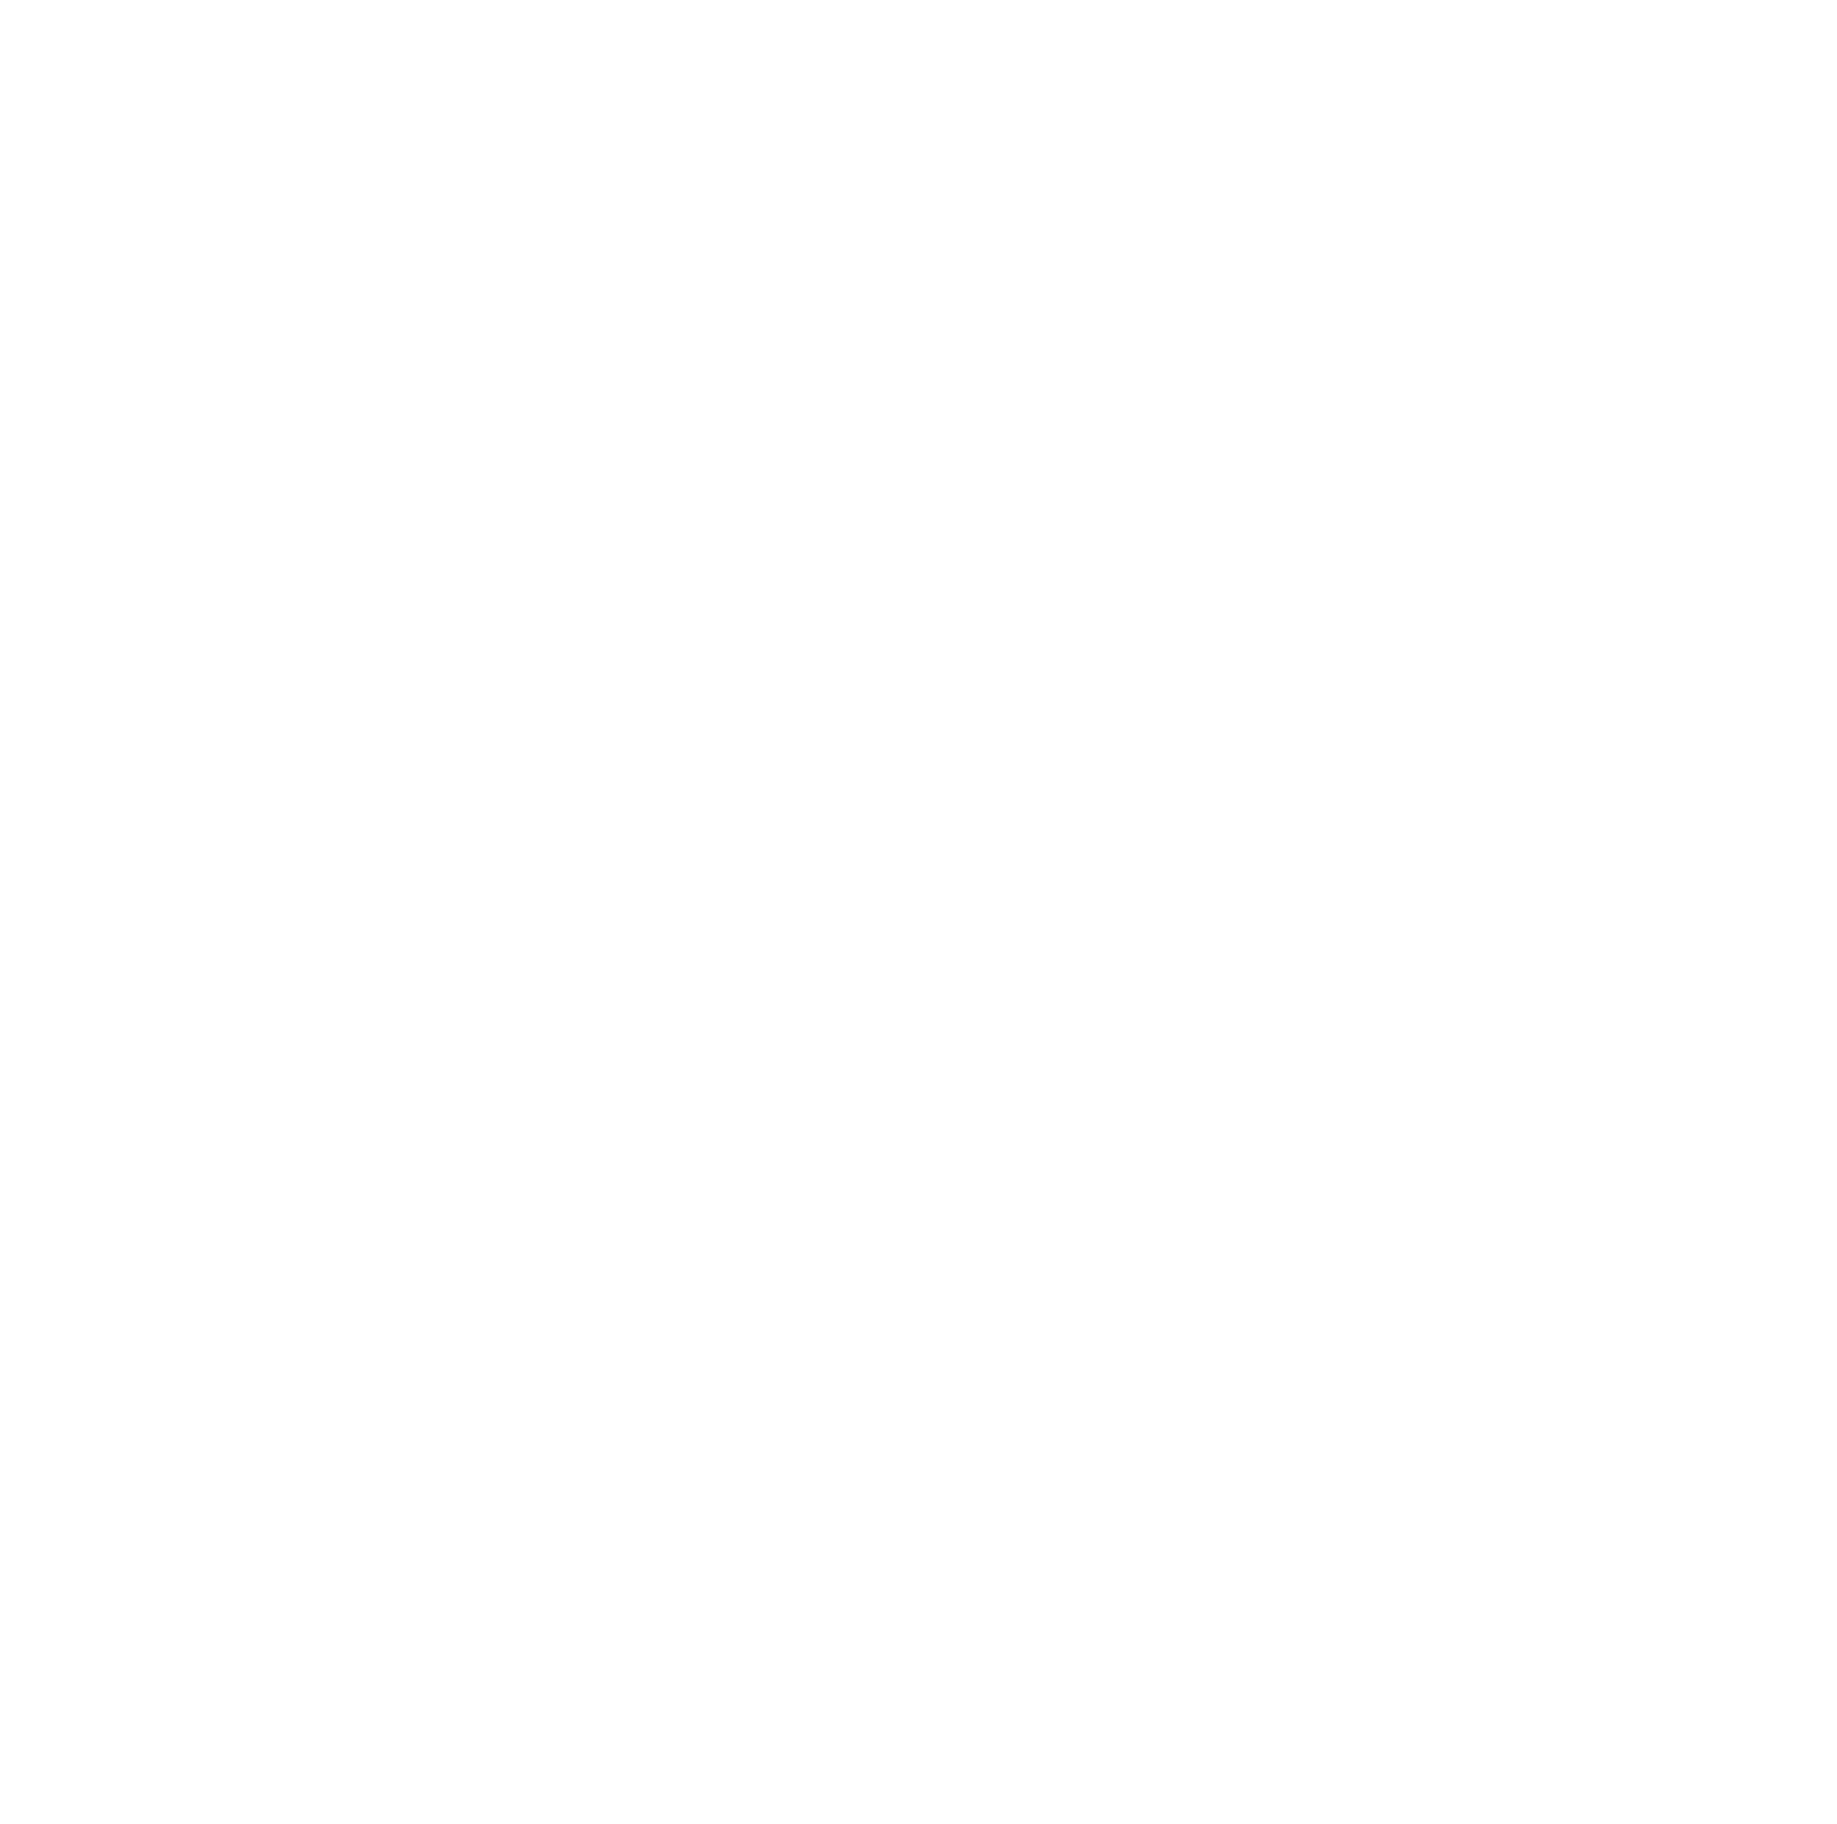 Savills aguirre newman